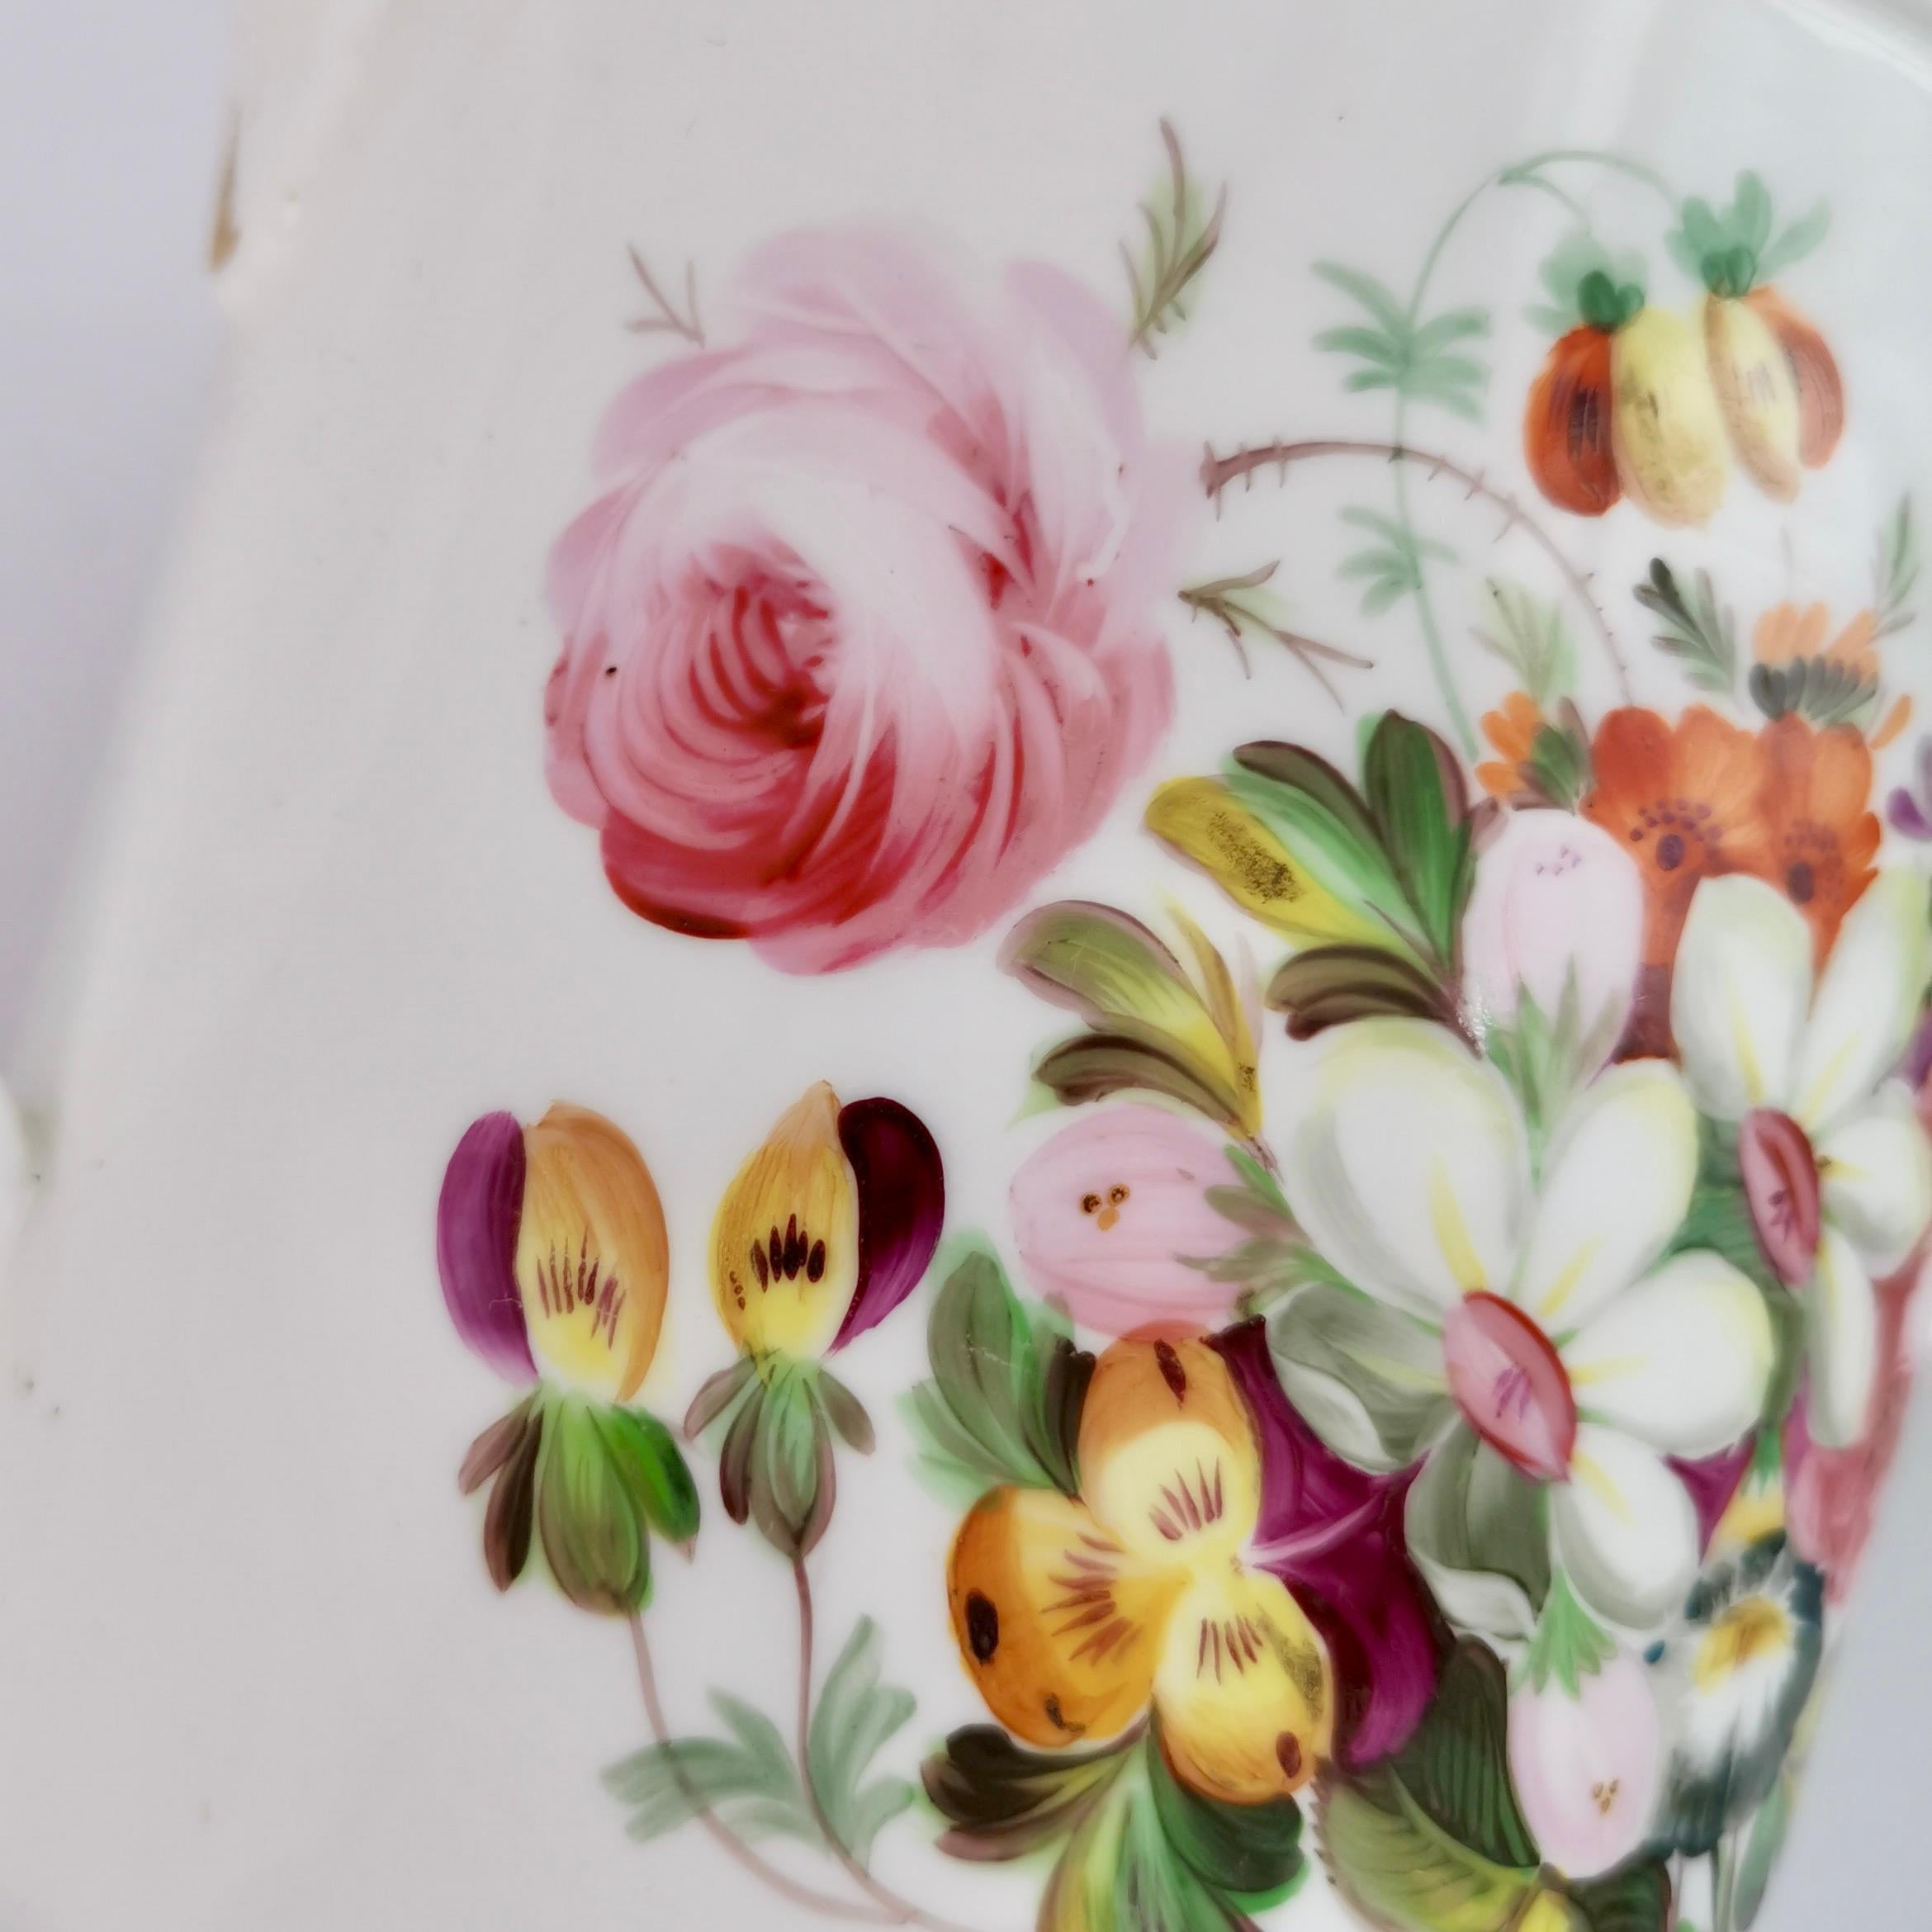 Mid-19th Century Coalport Porcelain Porter Mug, Flowers by Thomas Dixon for William Cooke, 1845